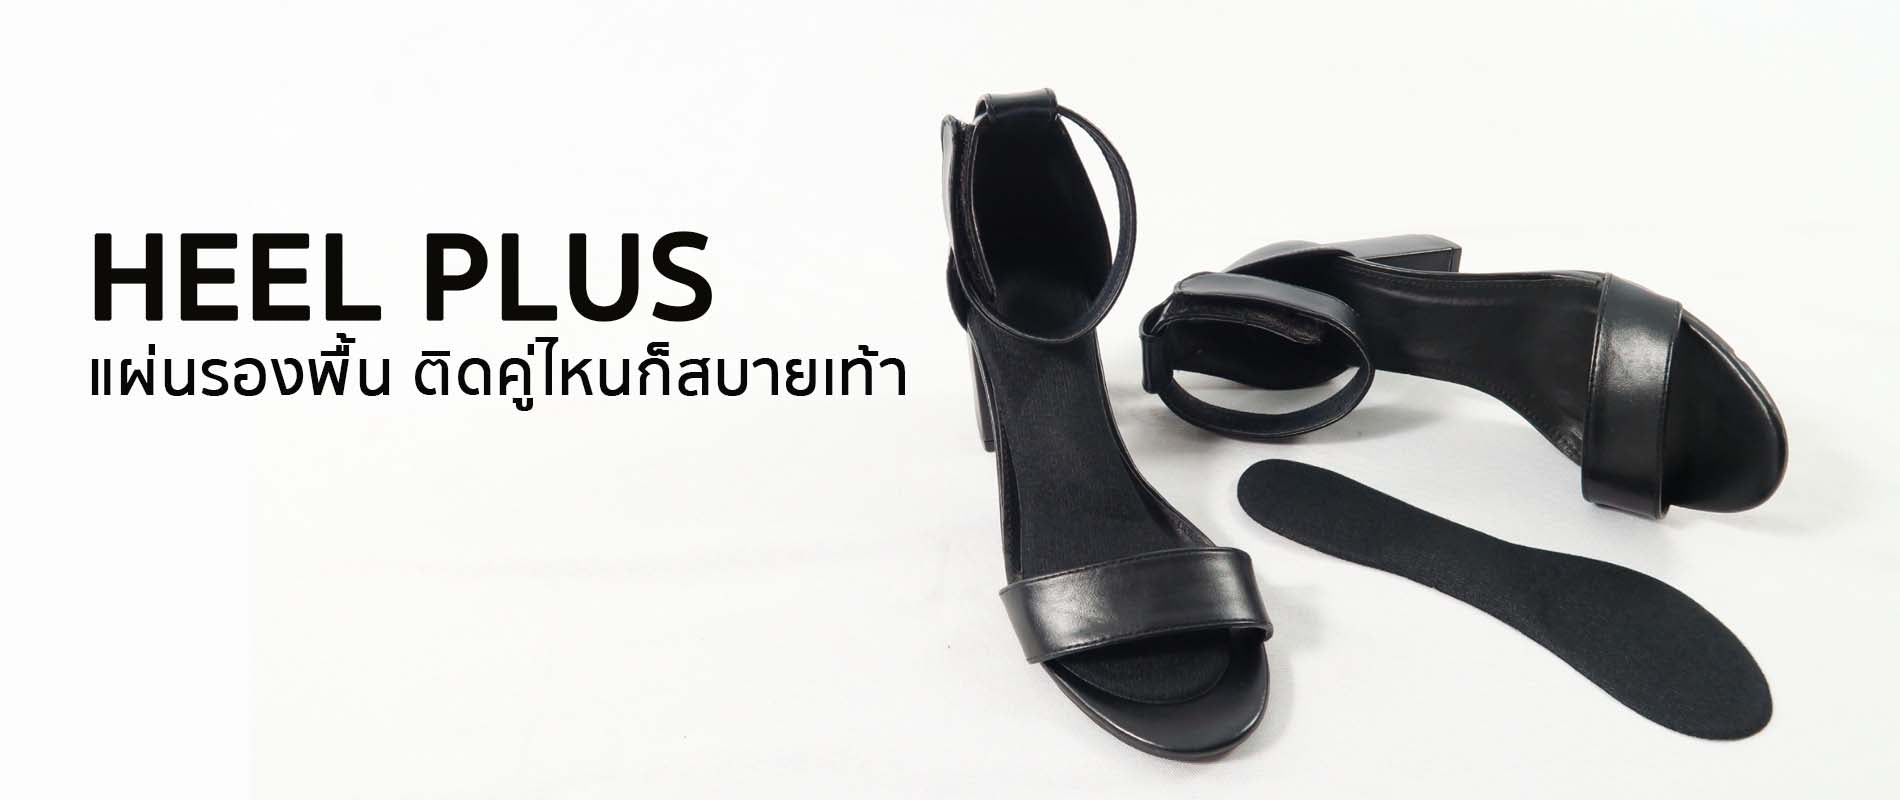 Heel plus | Shoe accessories จำหน่ายอุปกรณ์รองเท้า ครบวงจรเจ้าแรกในไทย